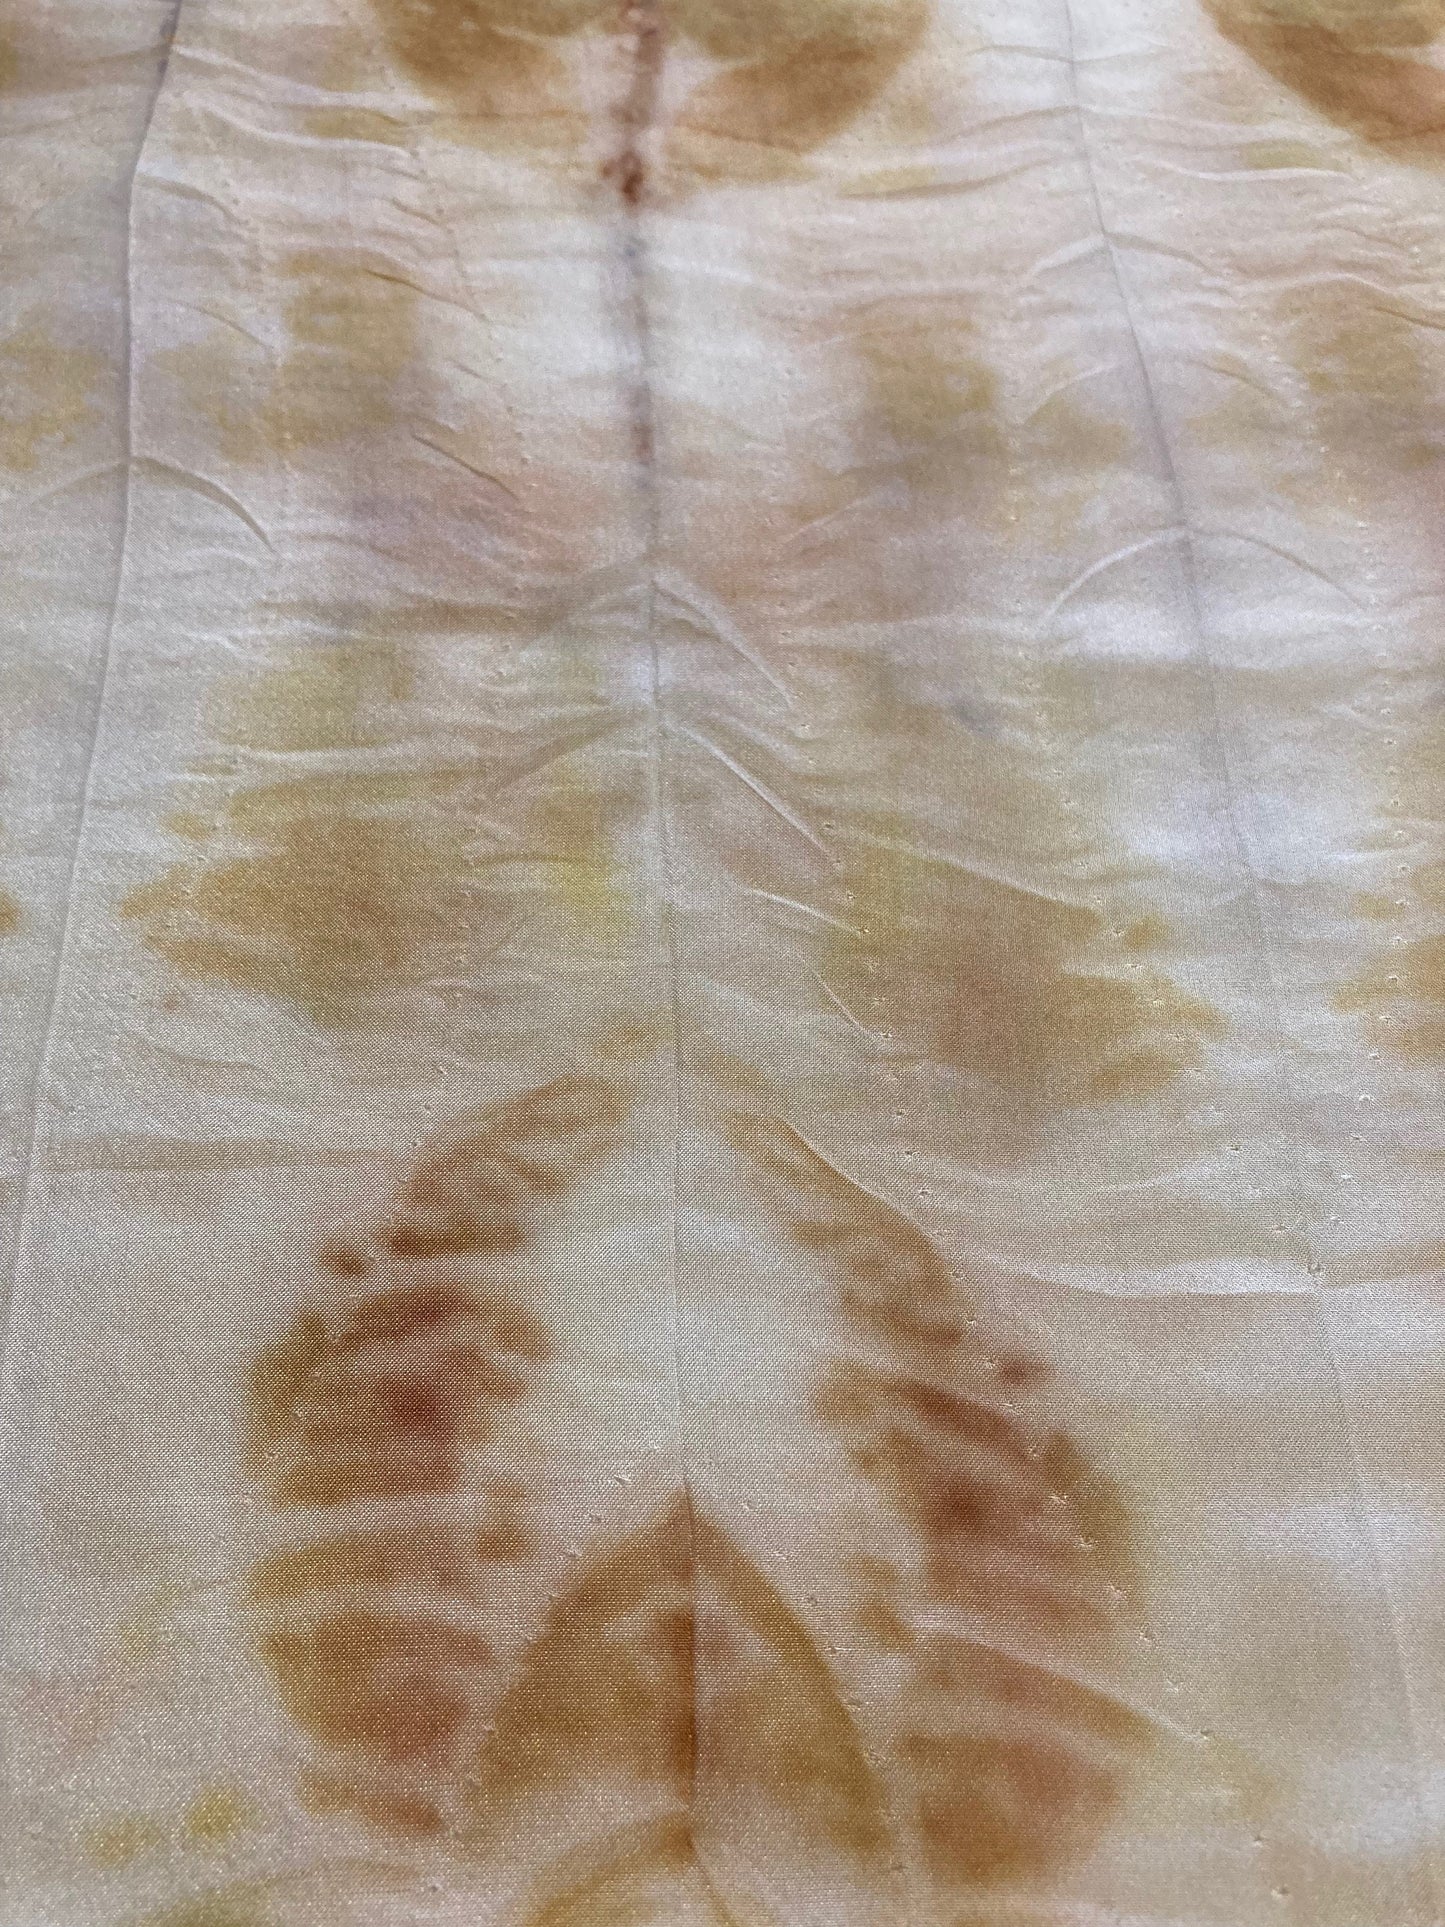 Silk Natural dyed fabric - yardage - natural dyes